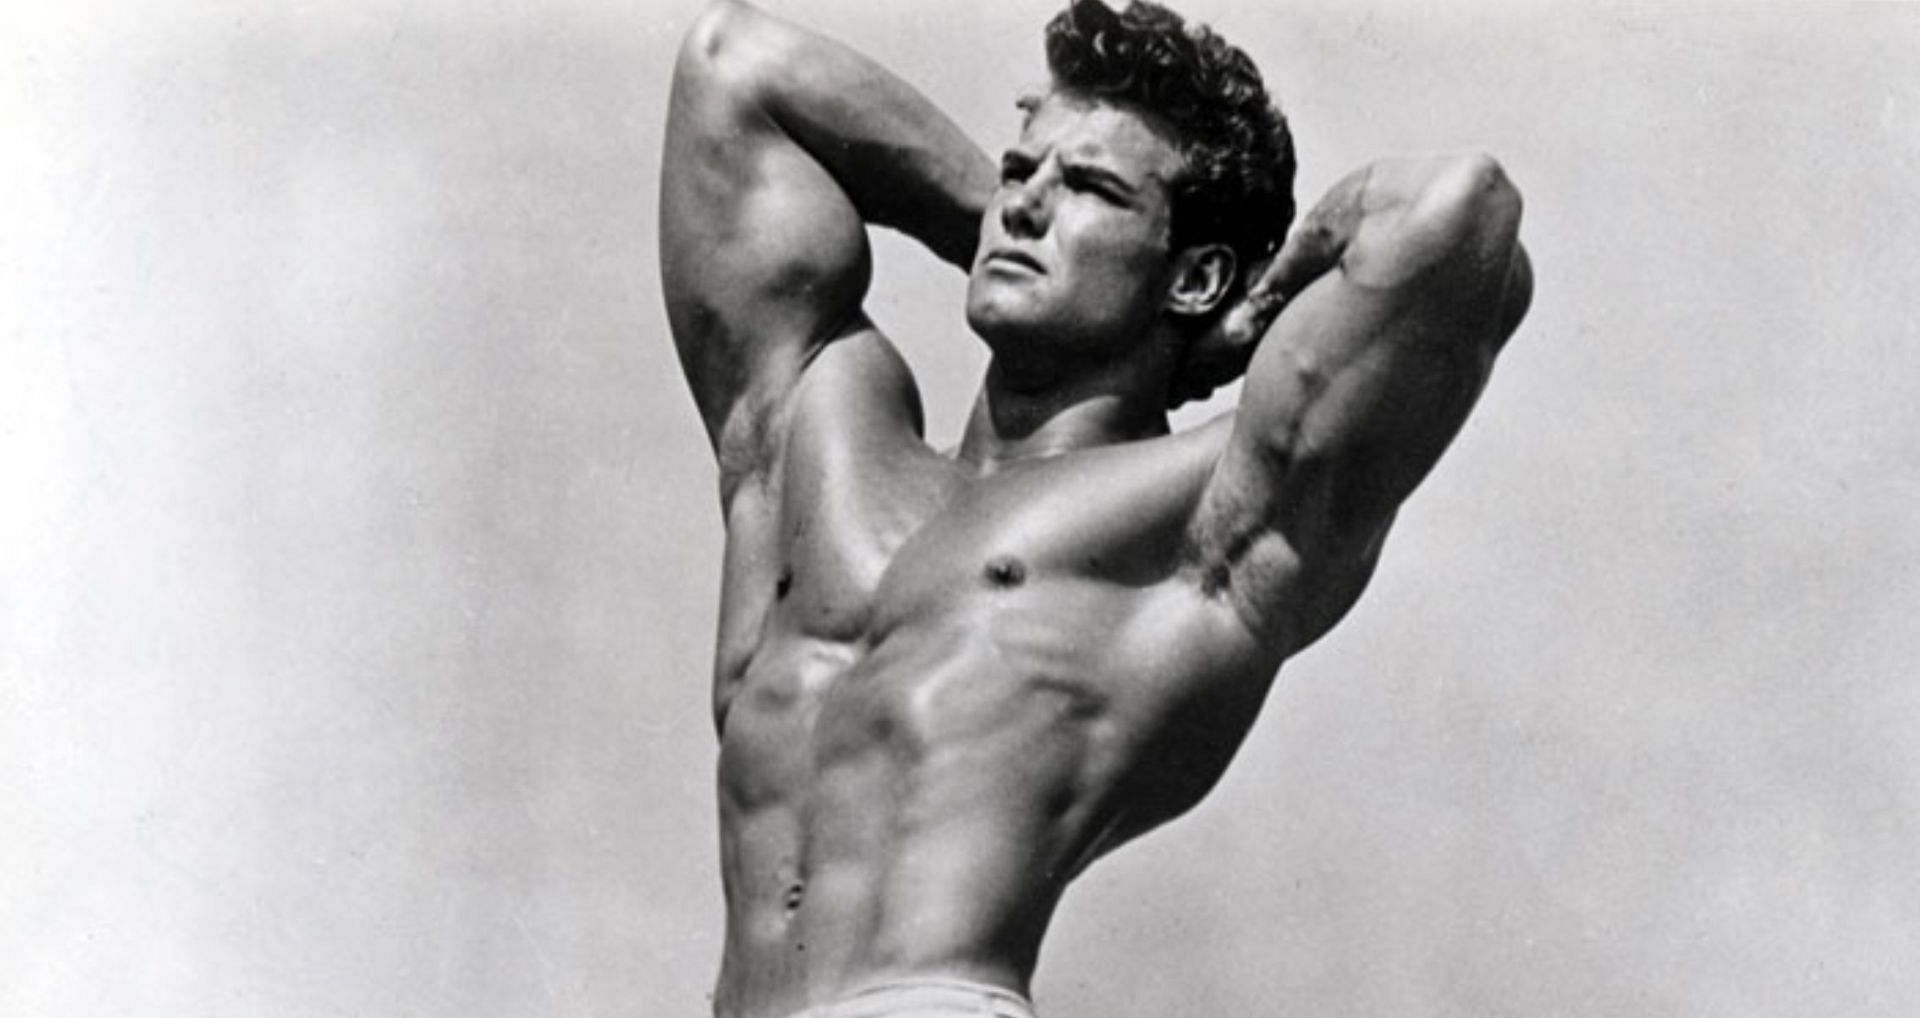 How did silver era bodybuilders train? (Image via Google)